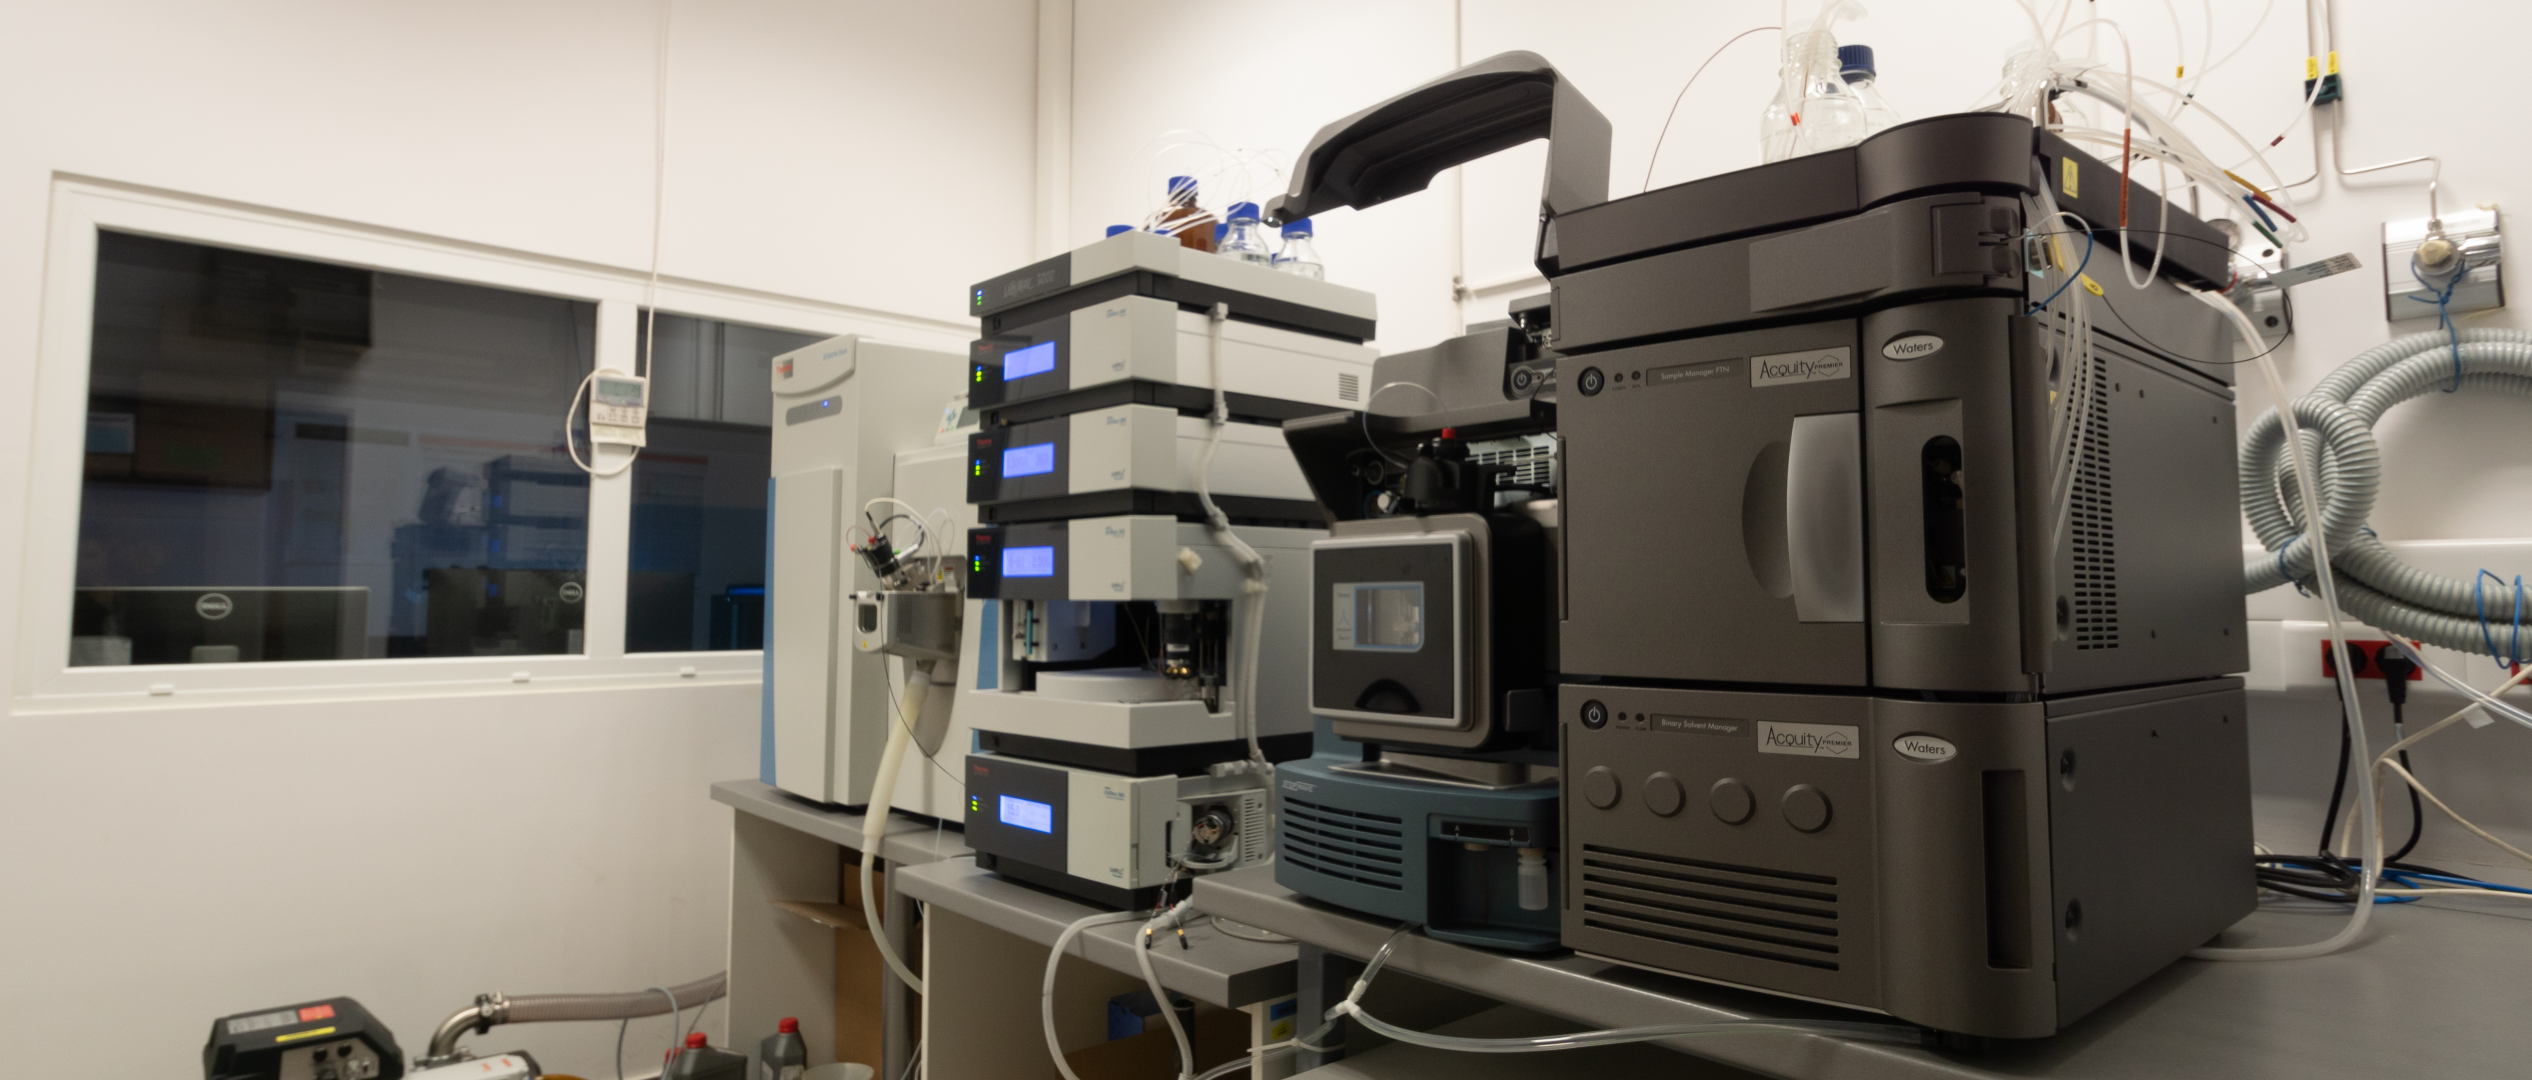 Instrumentation of the Metabolmics lab